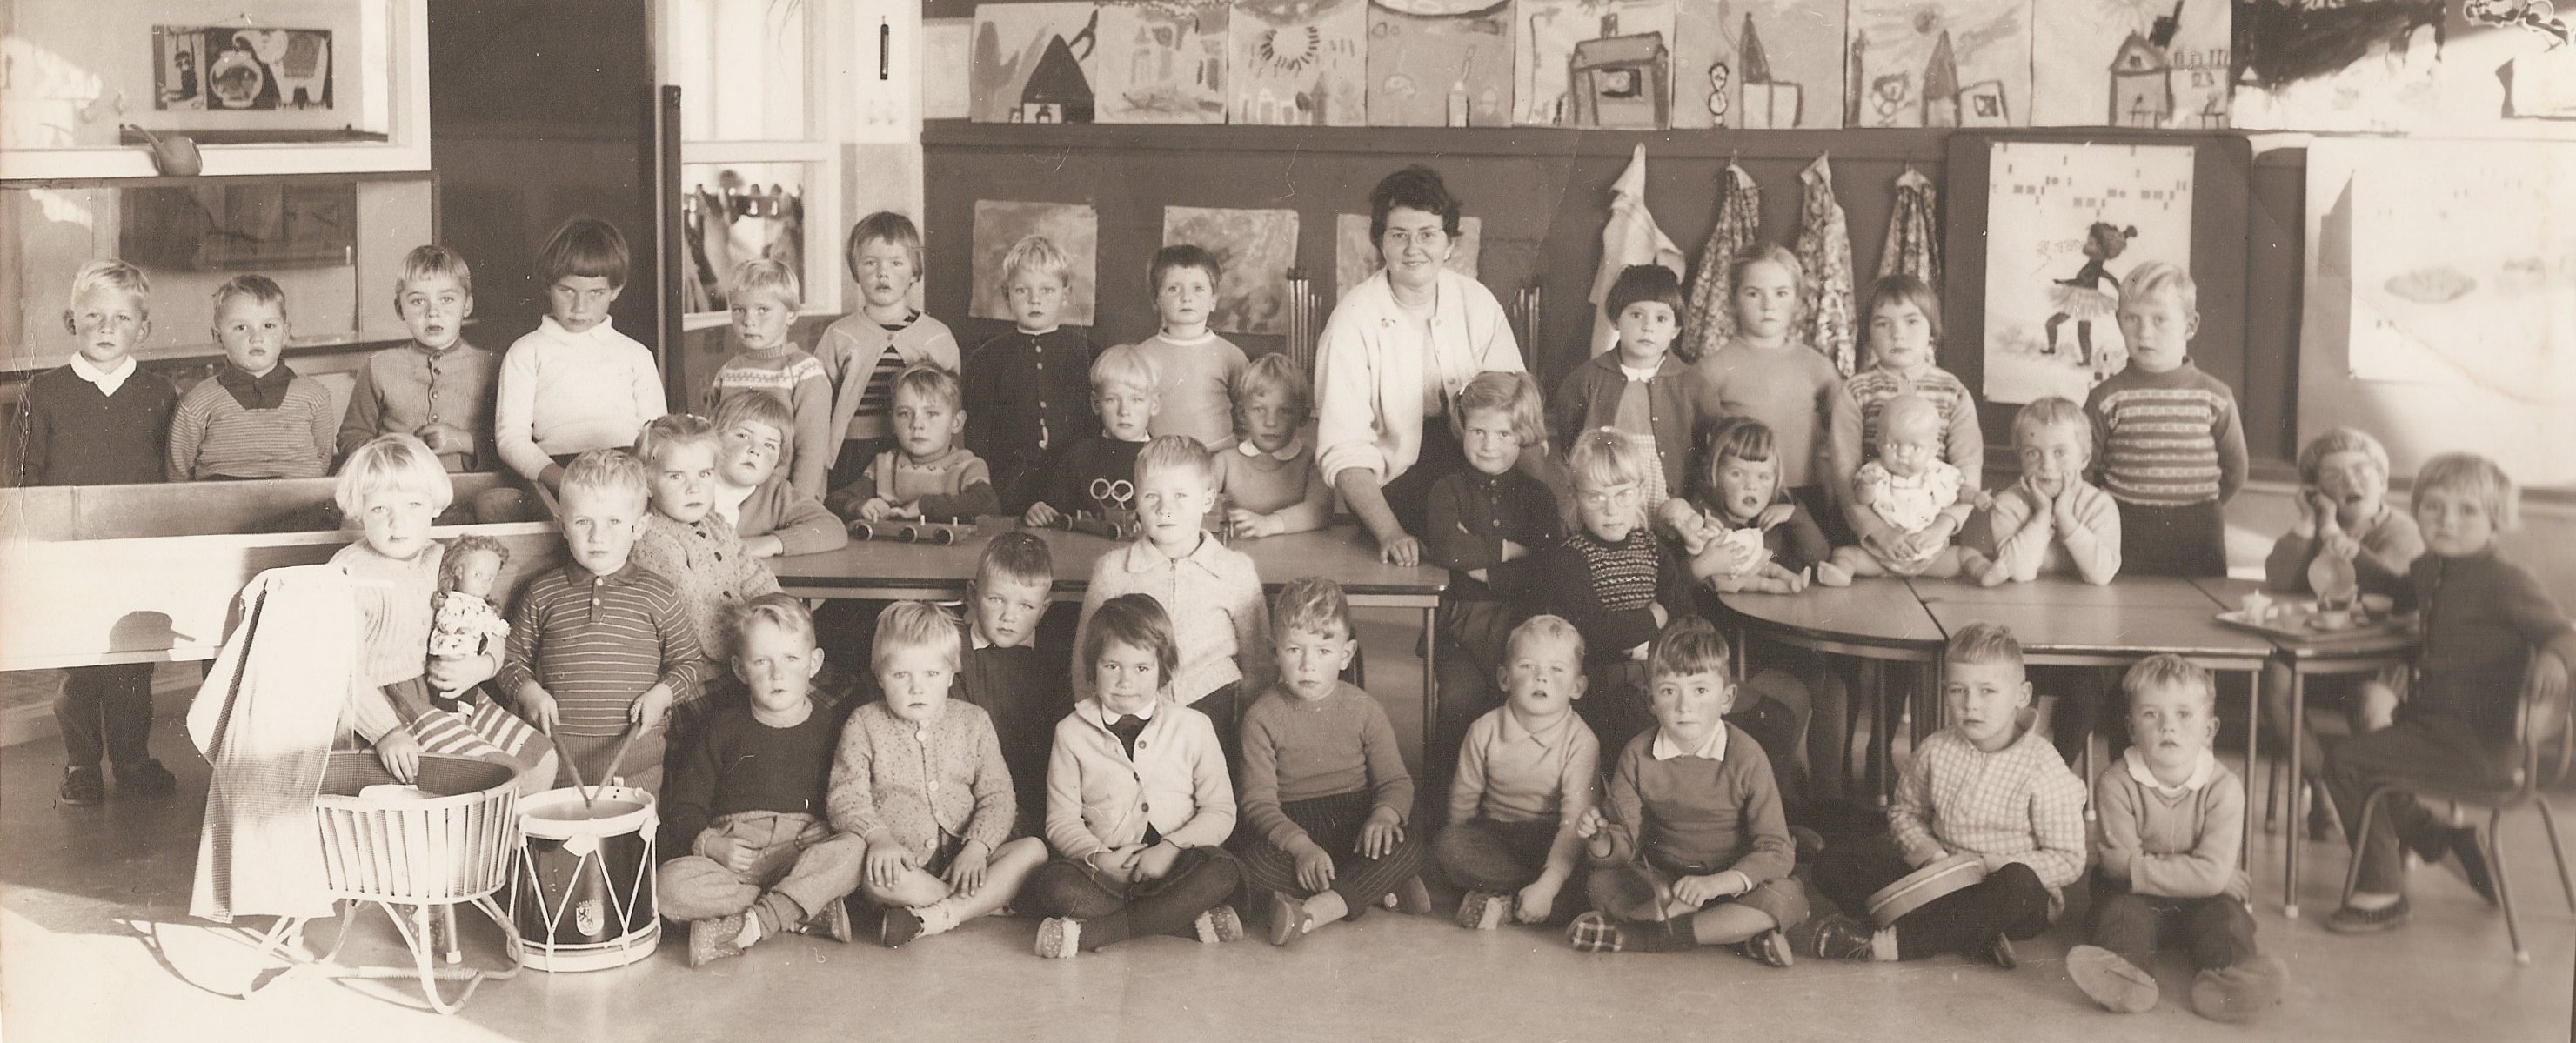 St. Bernadette kleuterschool foto